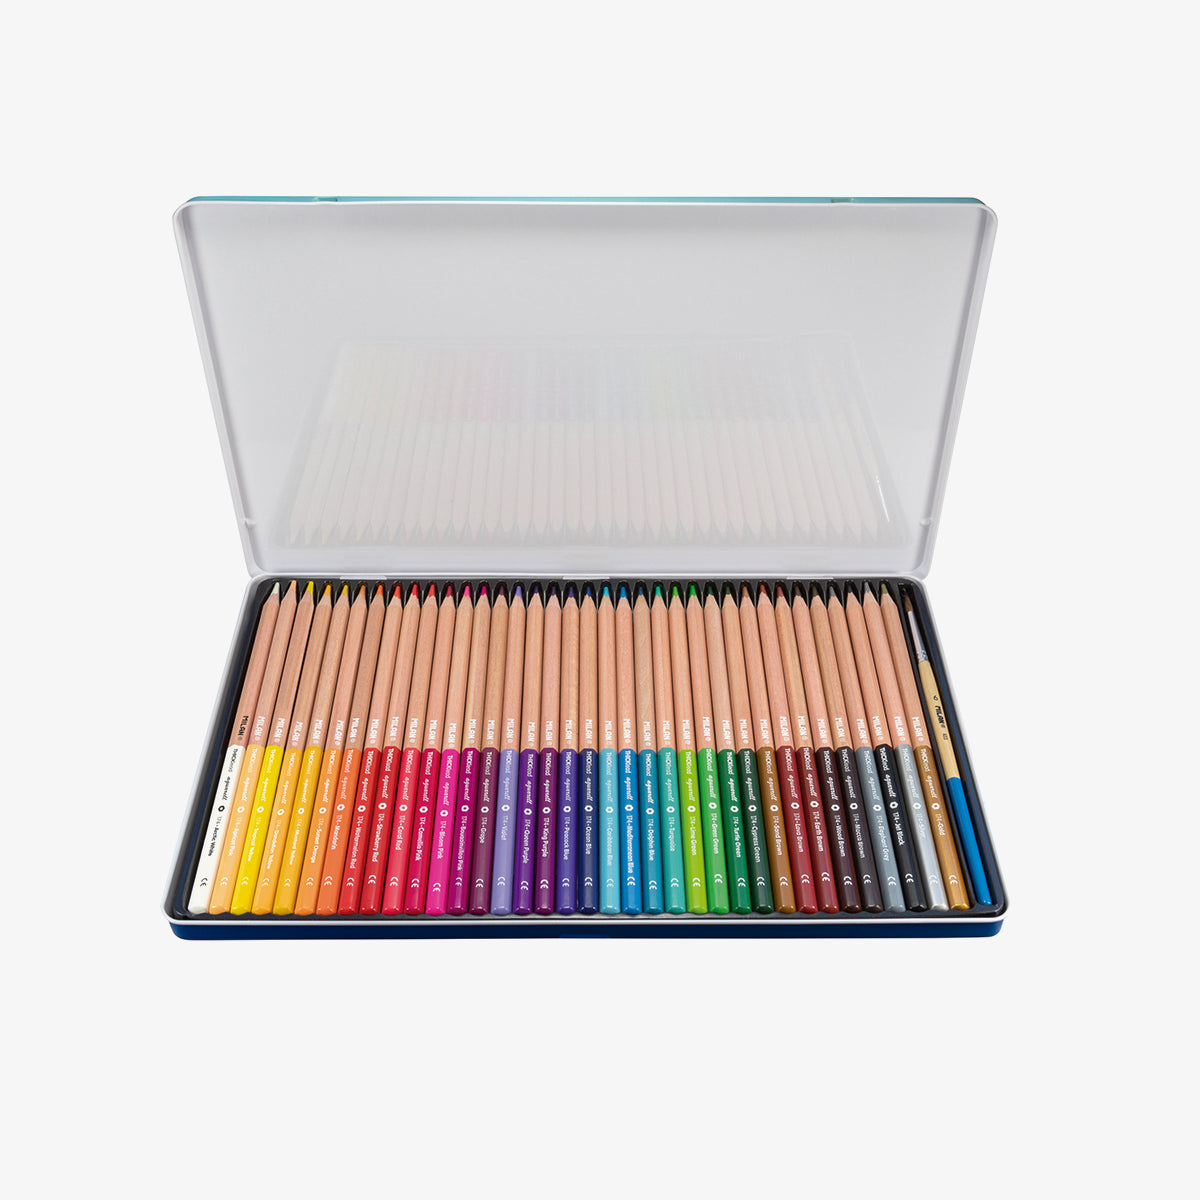 36 lápices acuarelables de colores con mina gruesa (3,5 mm) en caja metálica